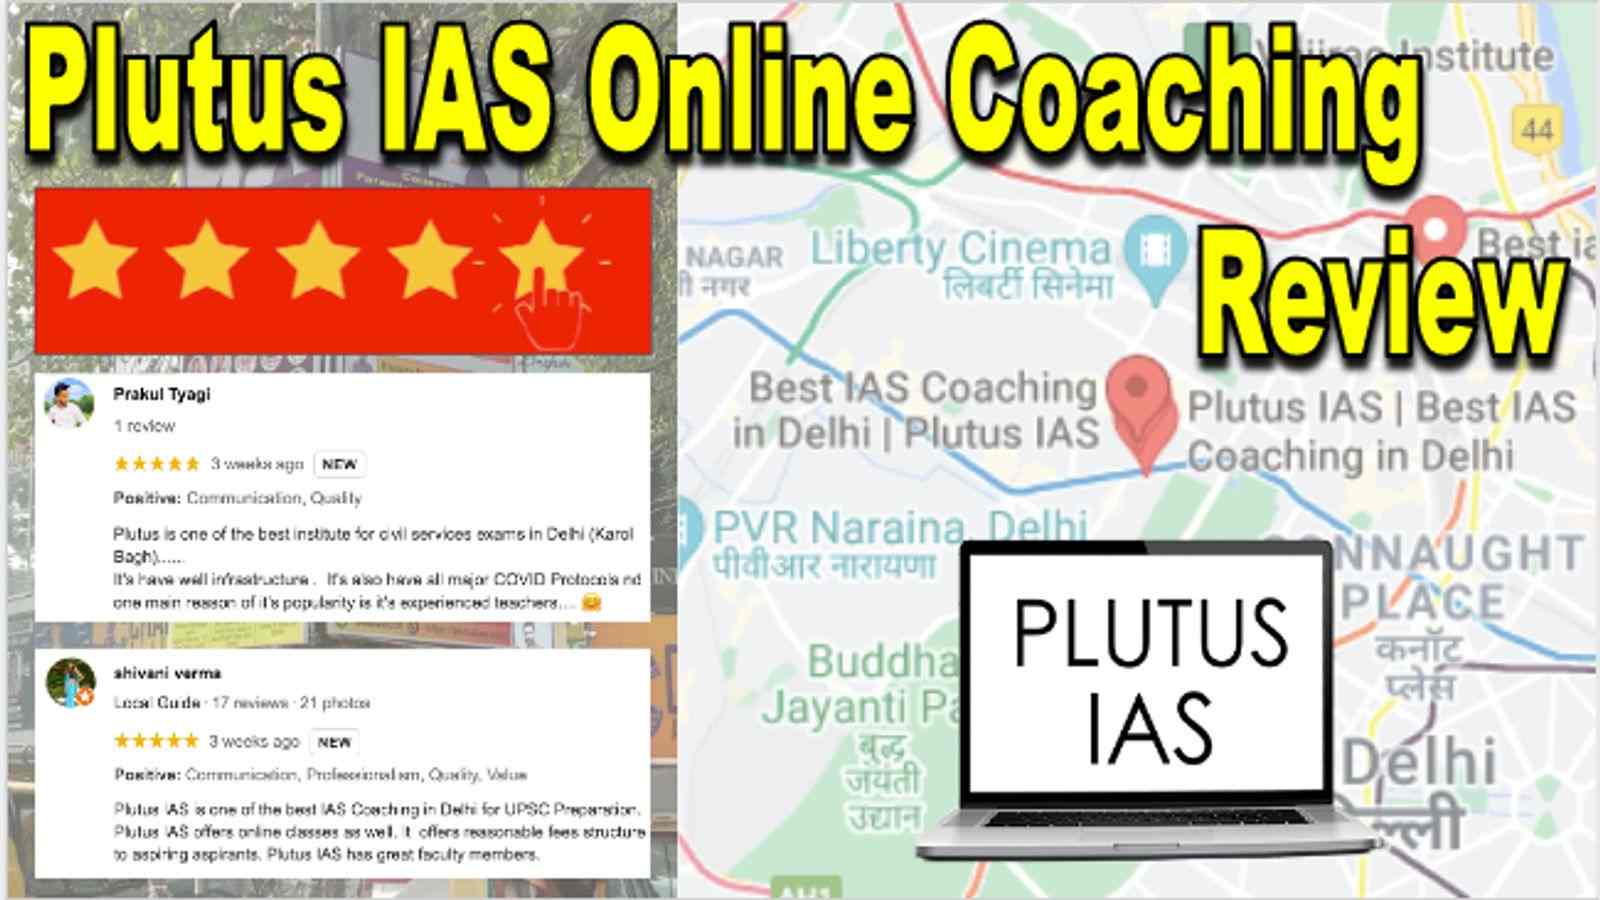 Plutus IAS Online Coaching Mumbai Review